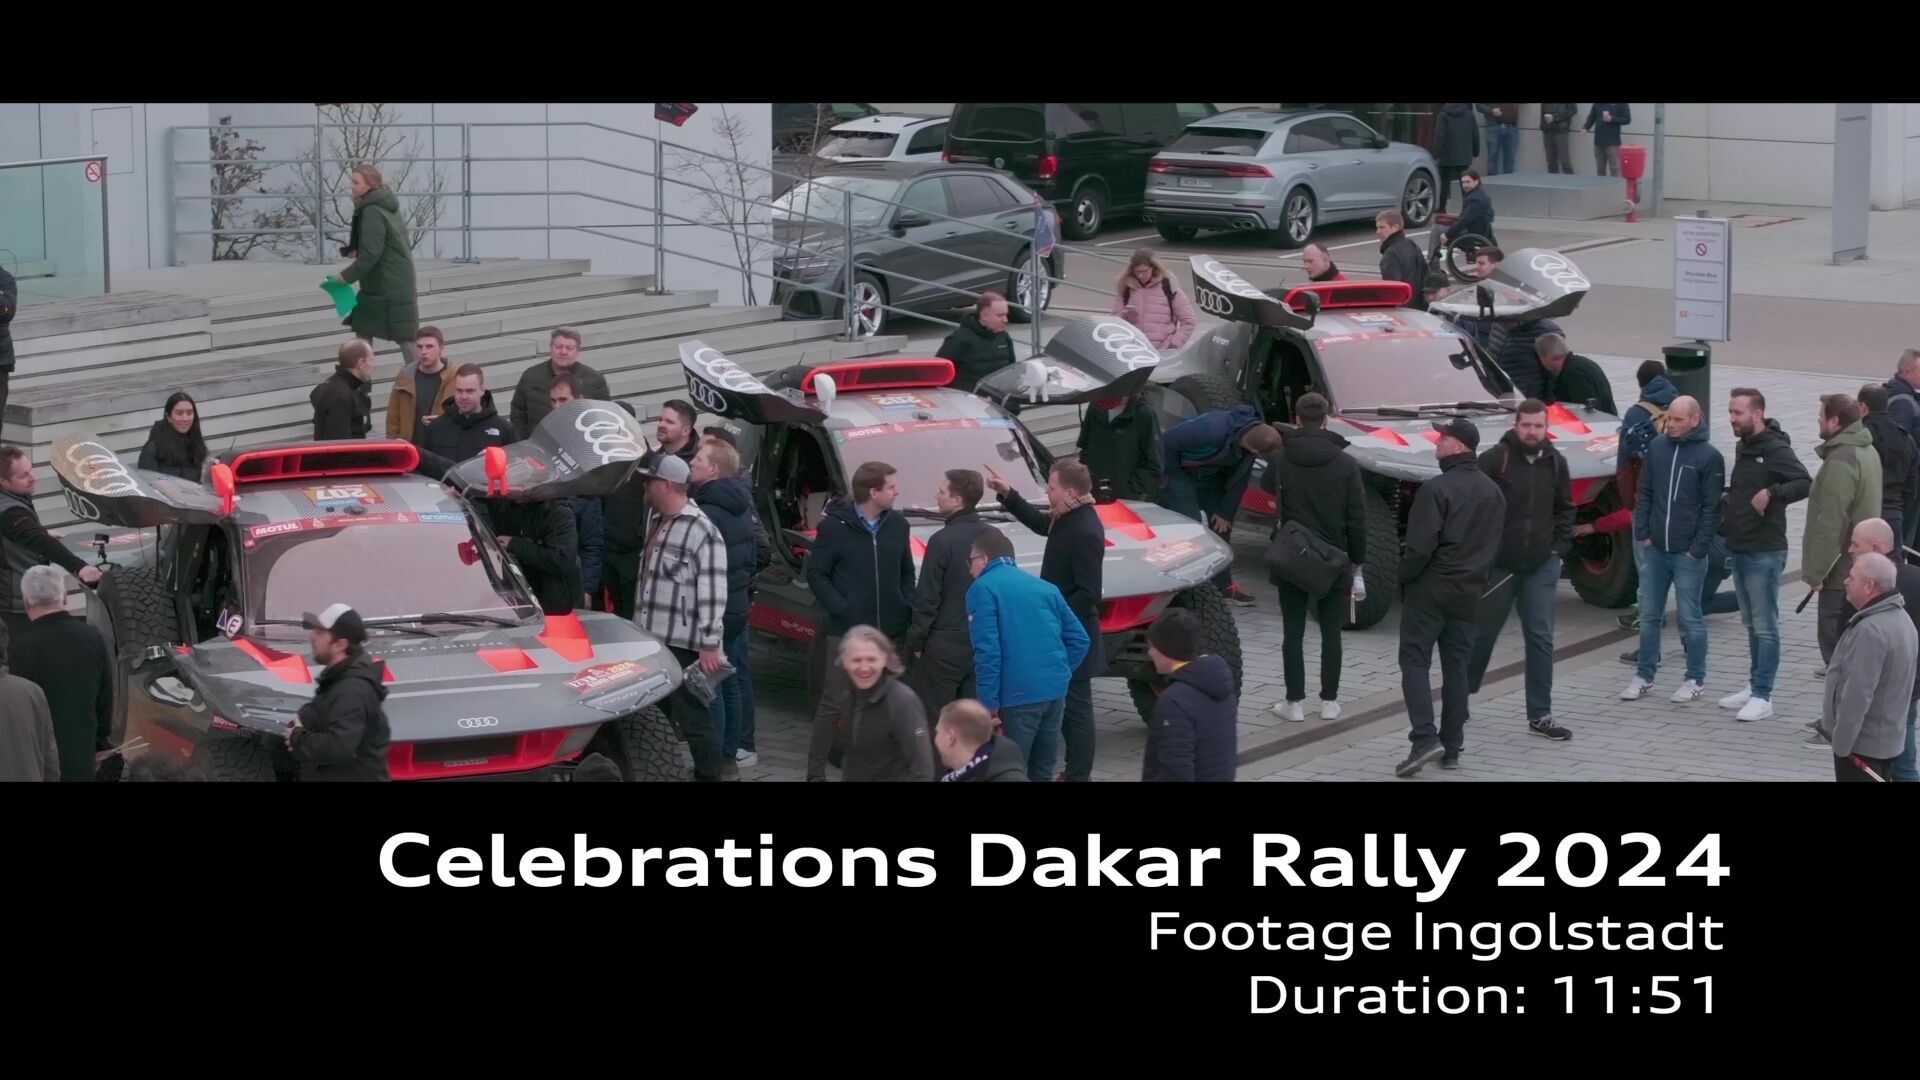 Footage: Celebrations Dakar Rally 2024